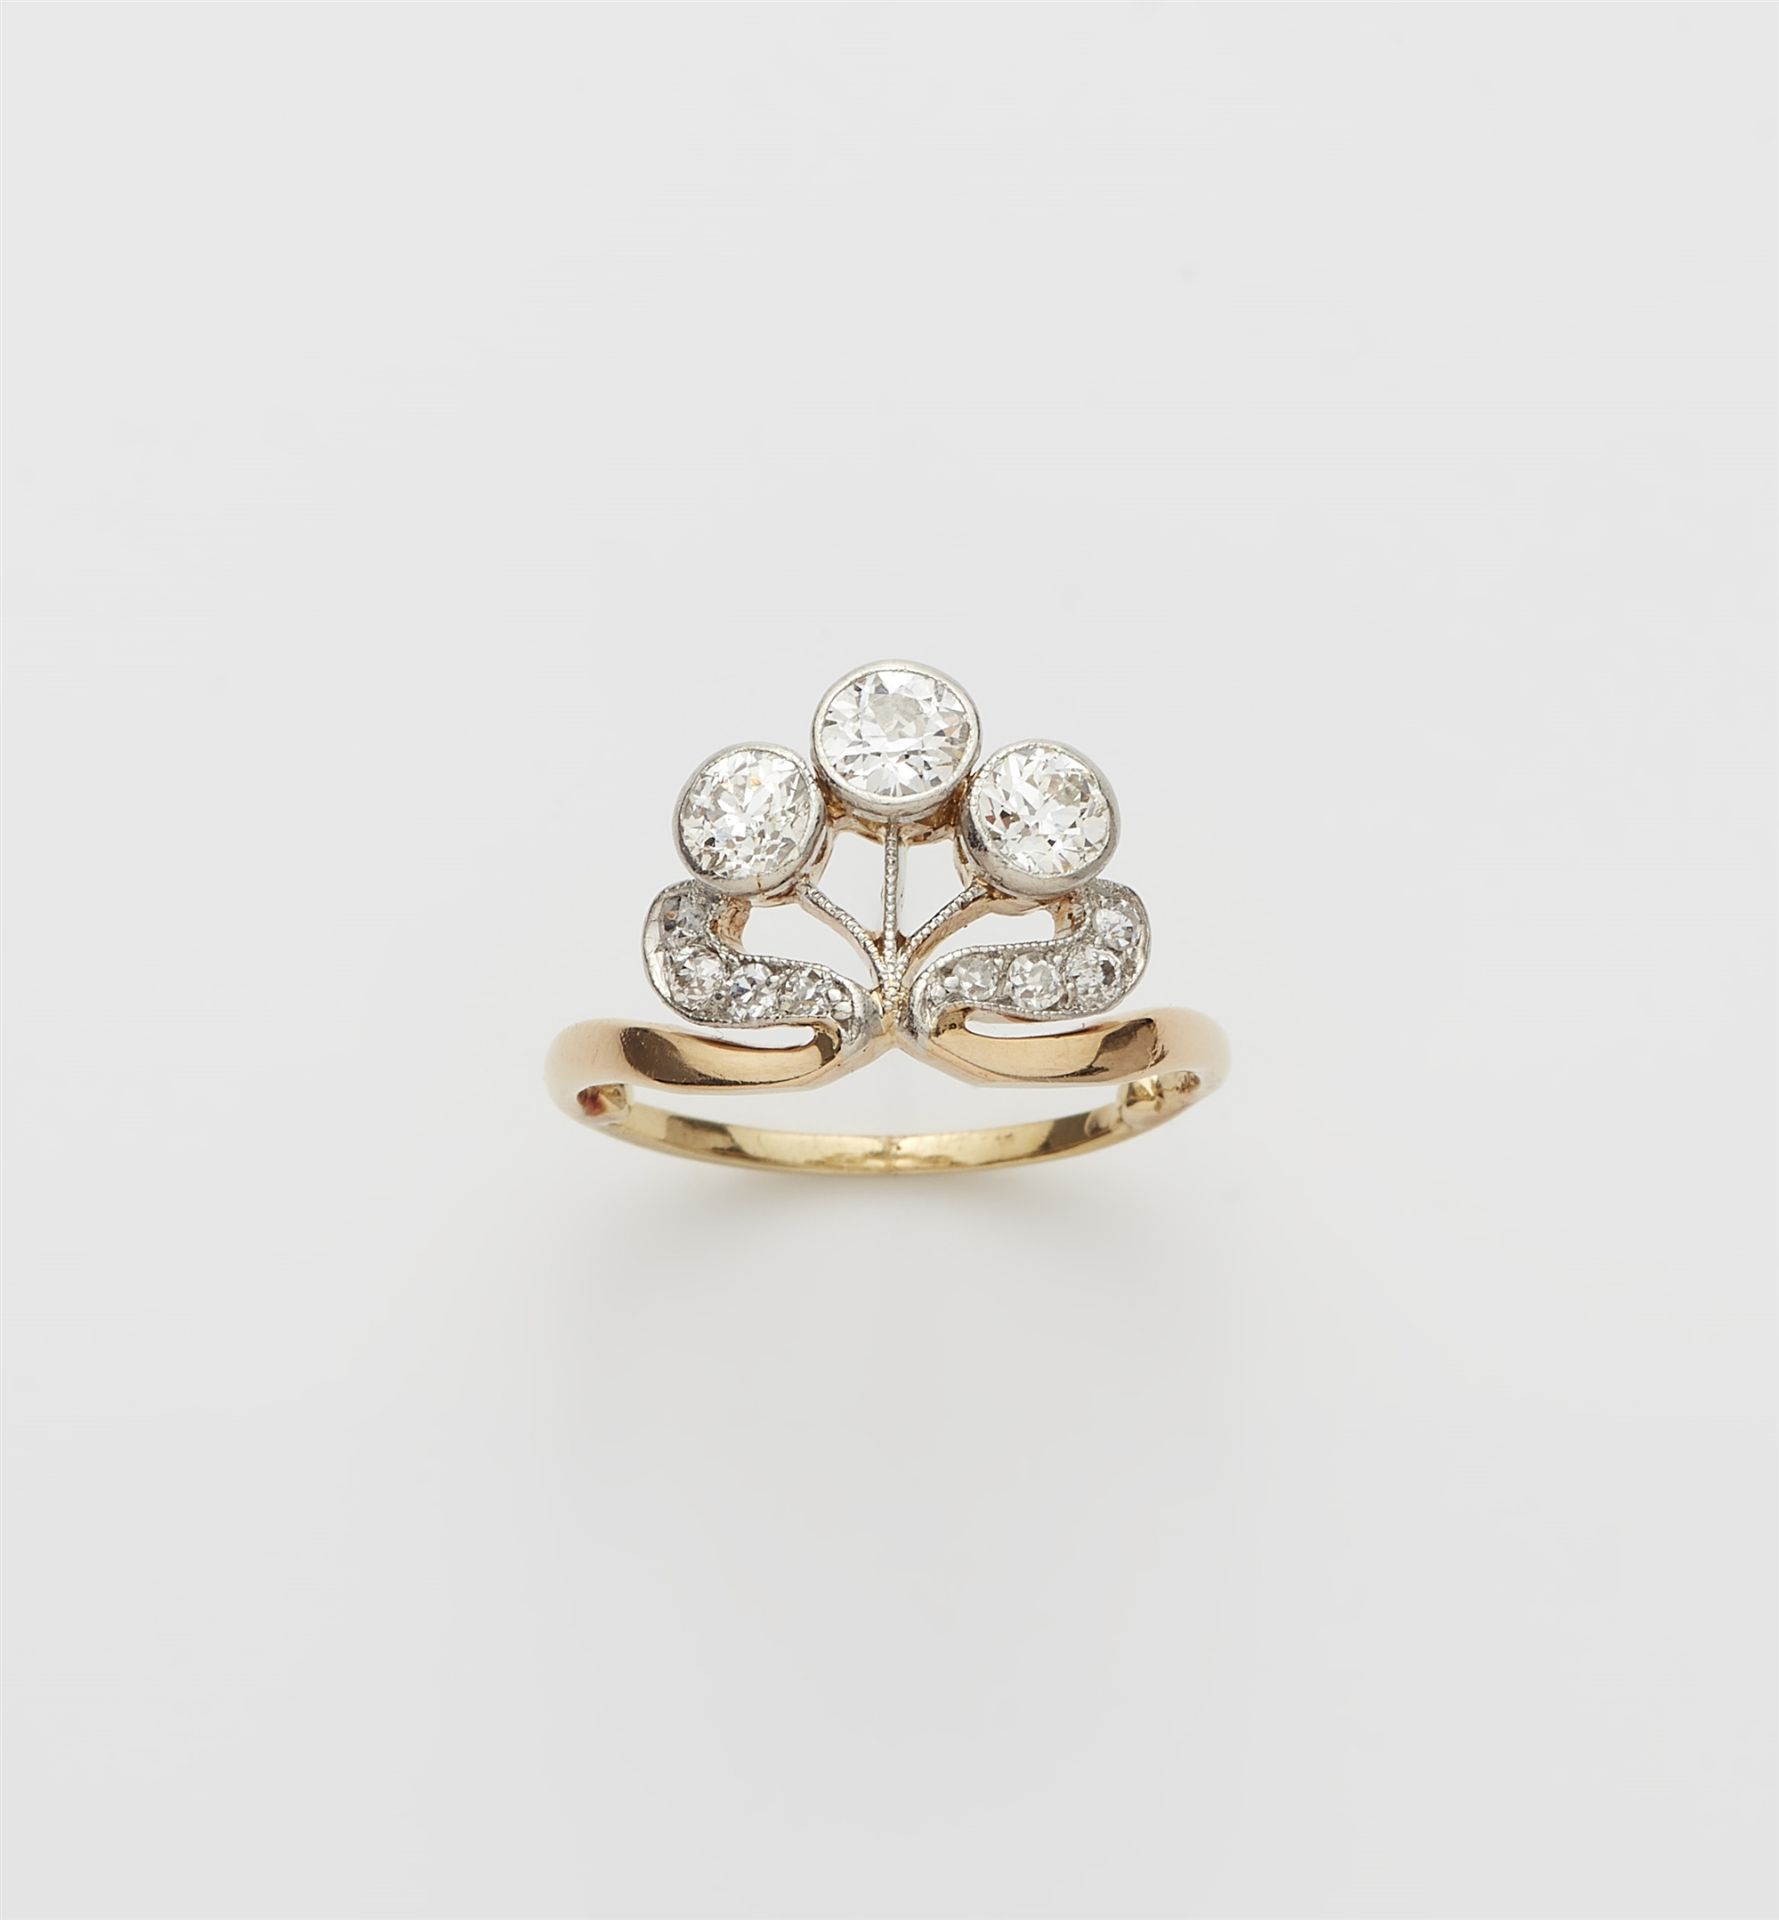 An 14k gold and diamond Art Nouveau ring.